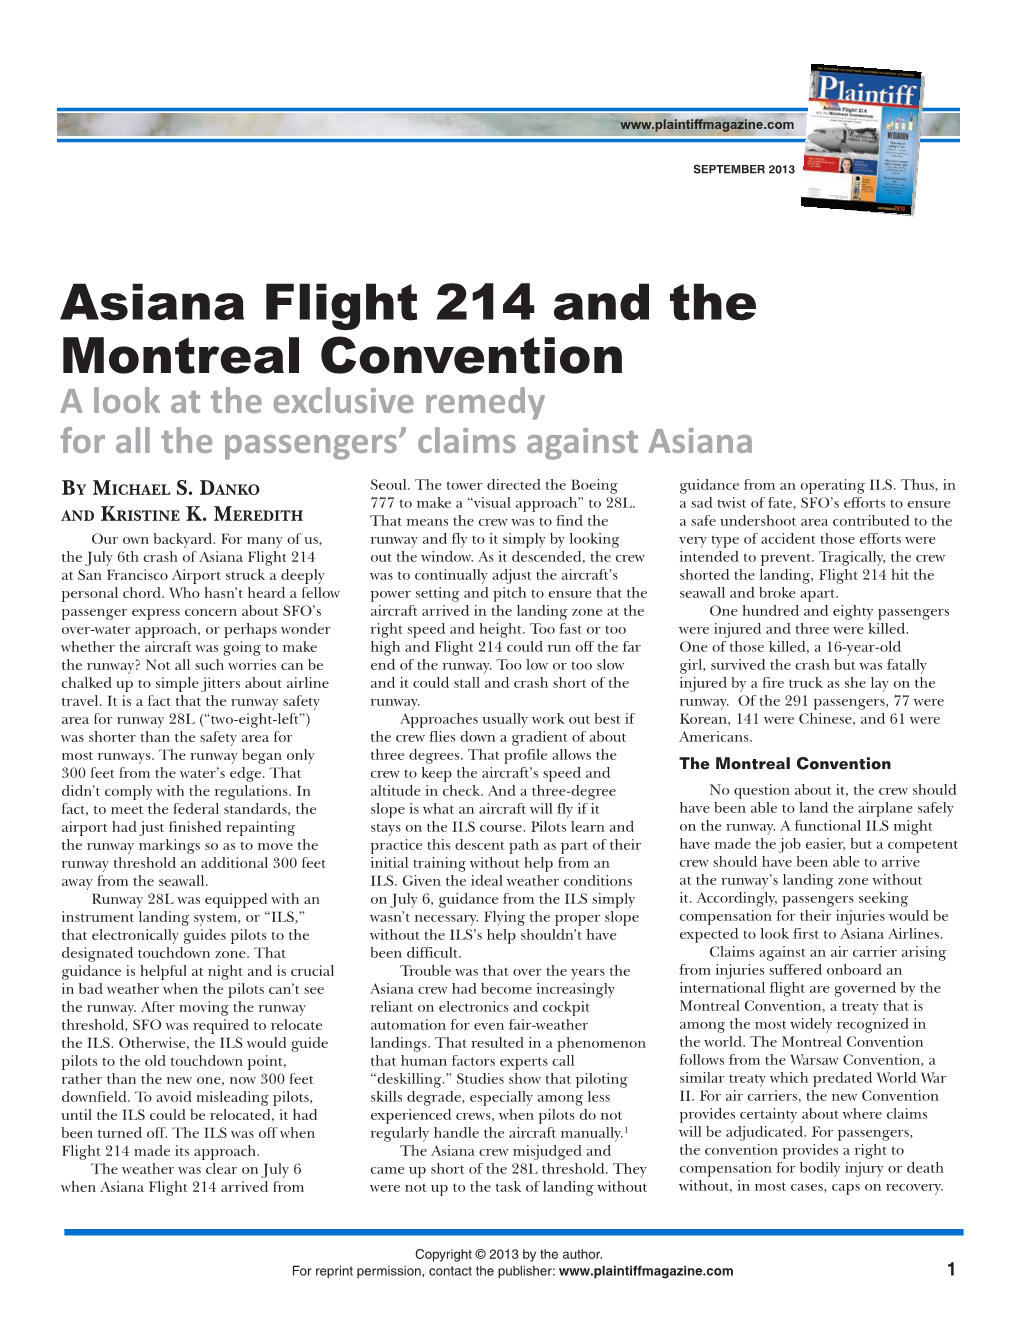 Asiana Flight 214 and the Montreal Convention Plaintiff Magazine